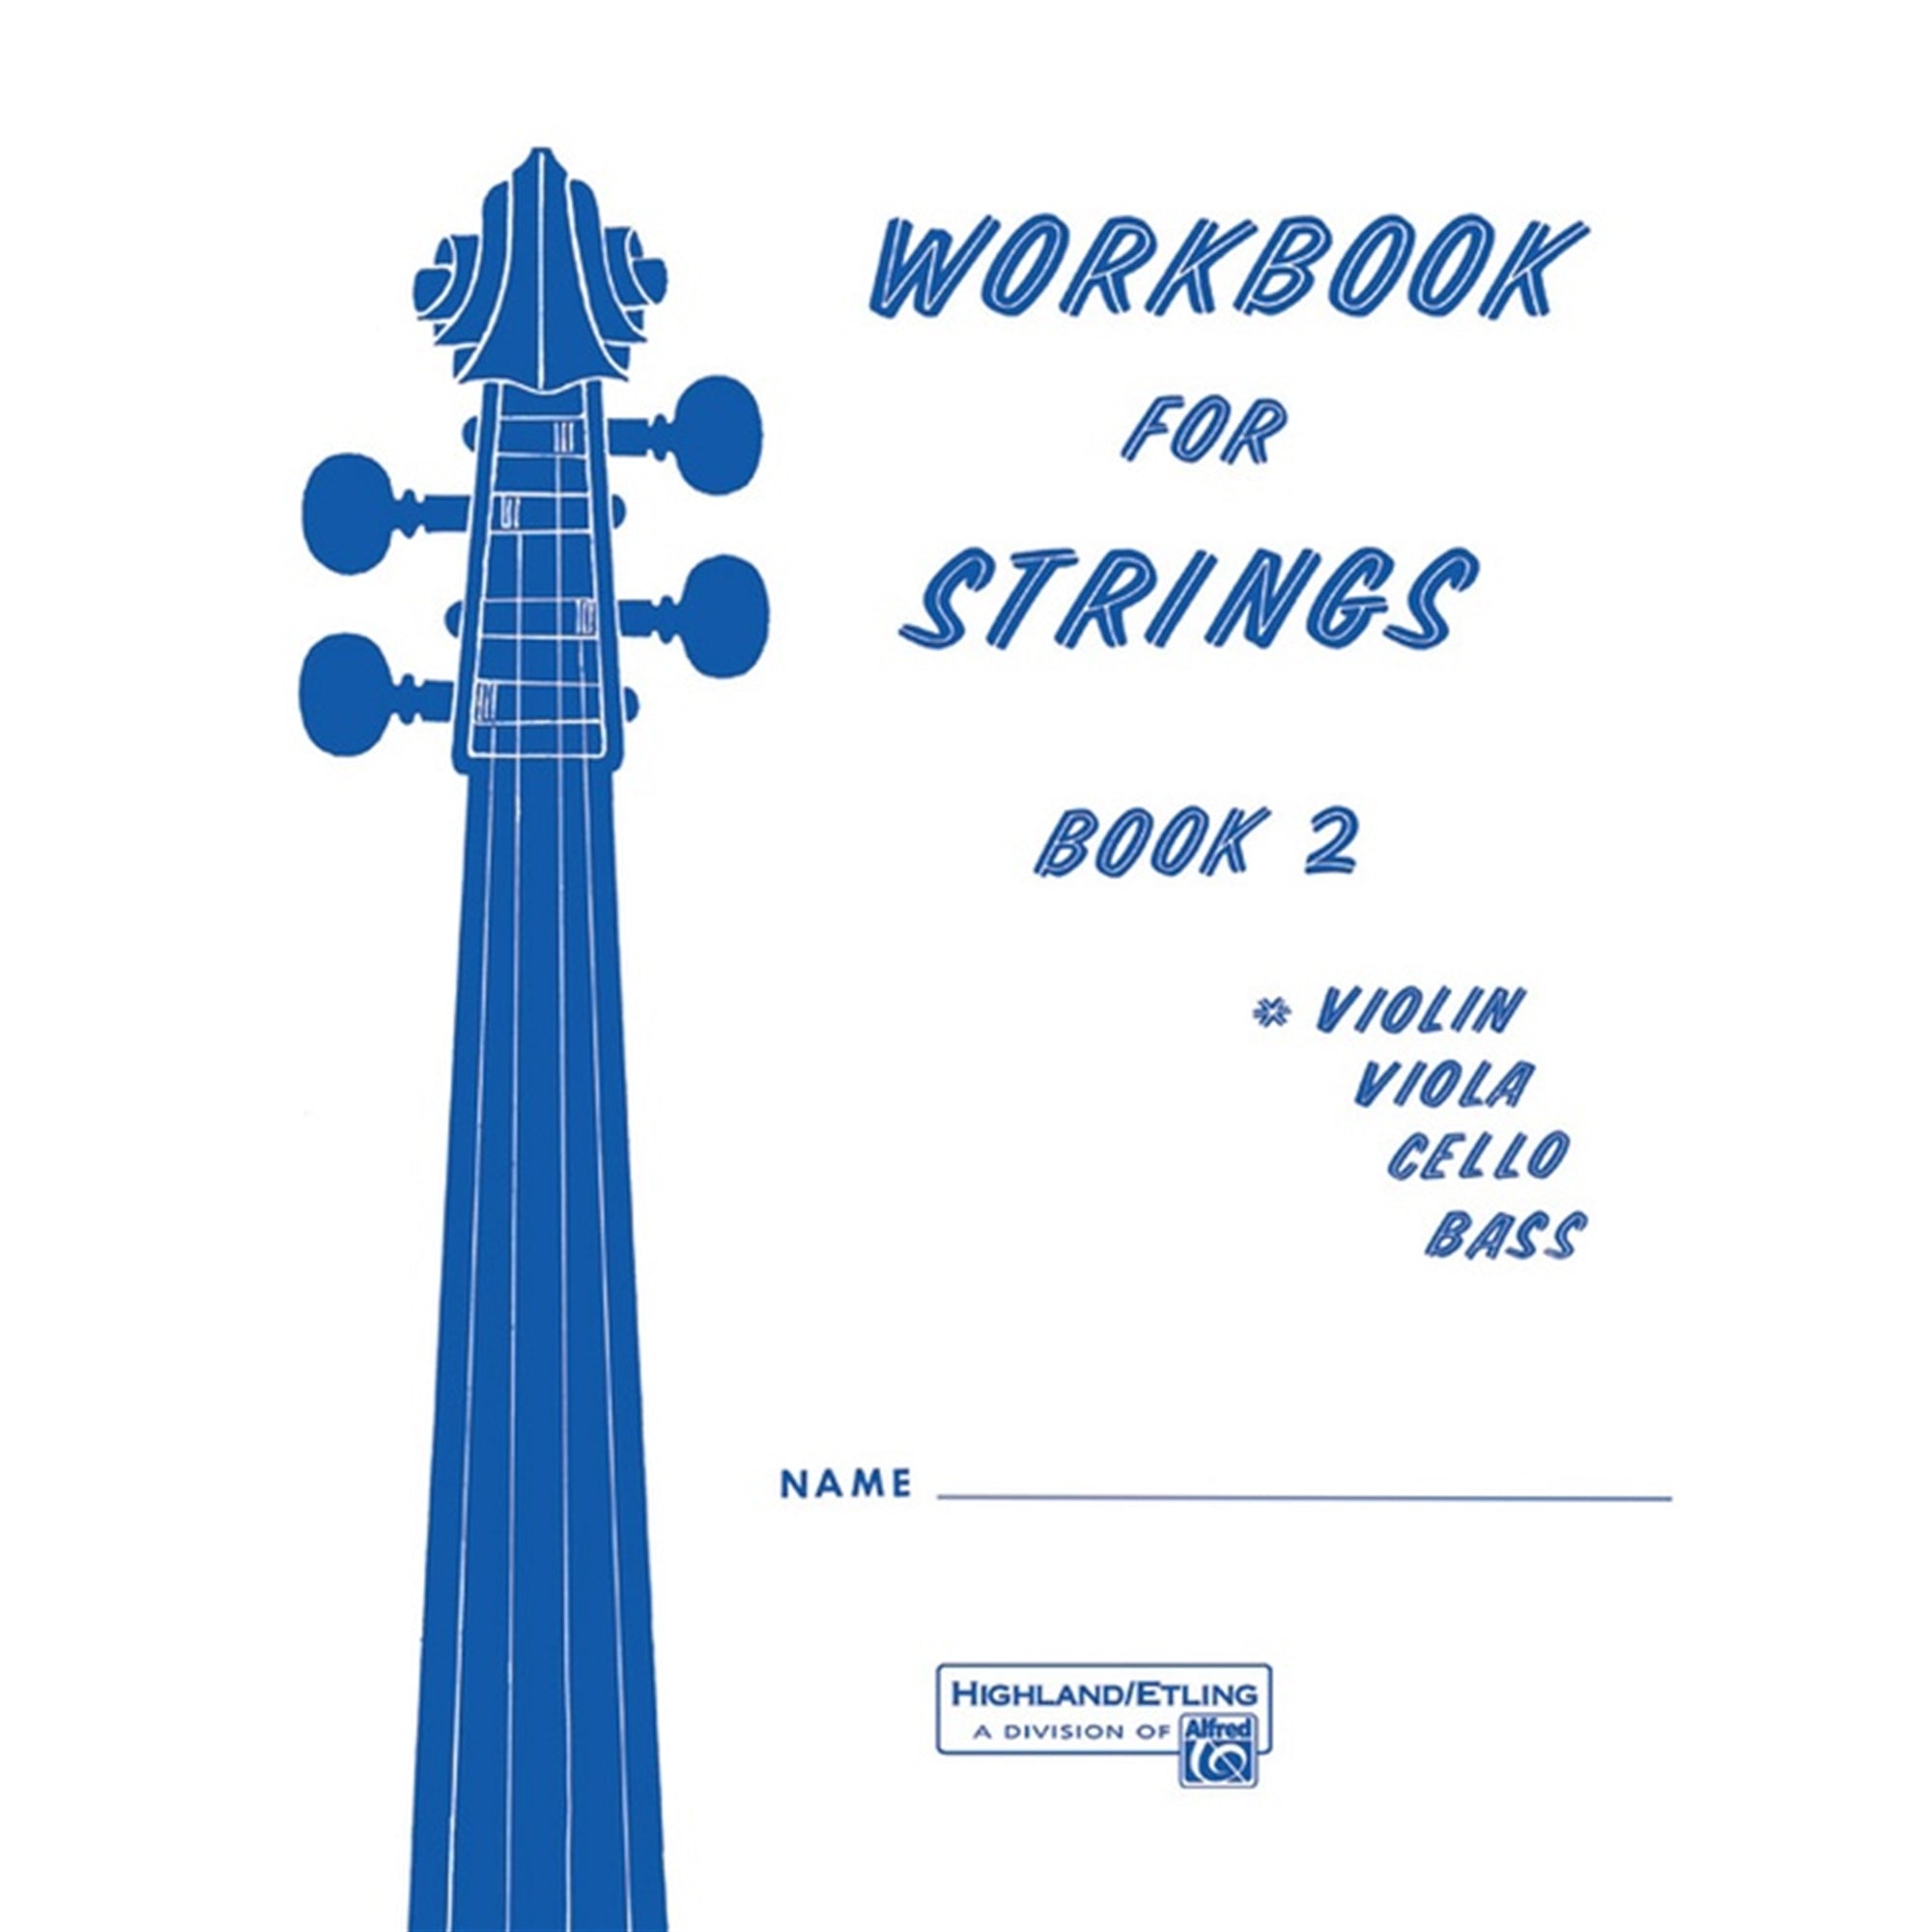 ALFRED 13174 Workbook for Strings, Book 2 [Violin]